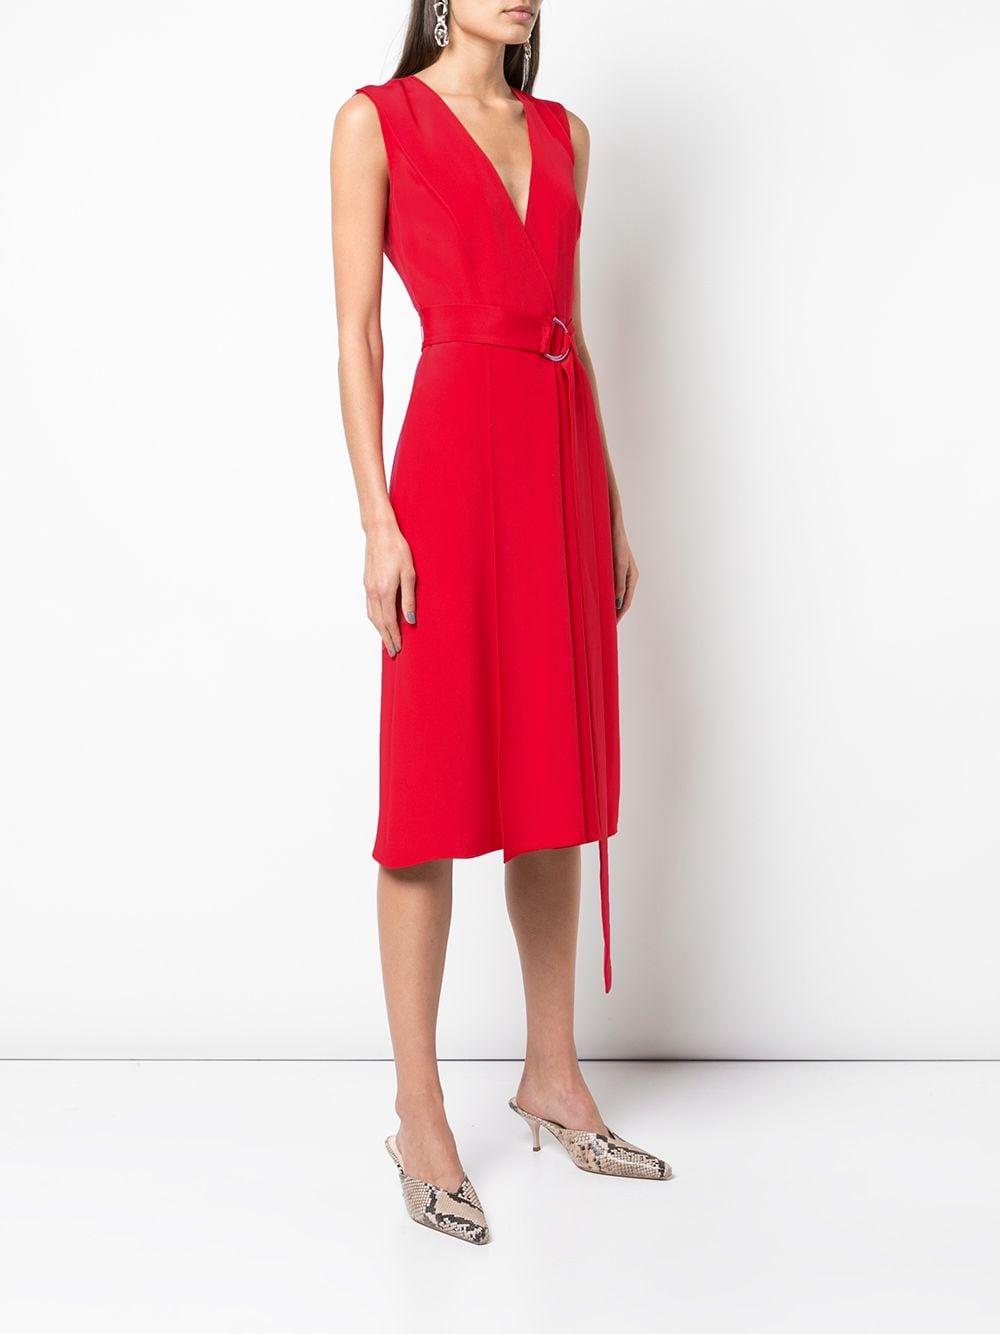 Jason Wu Sleeveless Wrap Dress in Red - Lyst